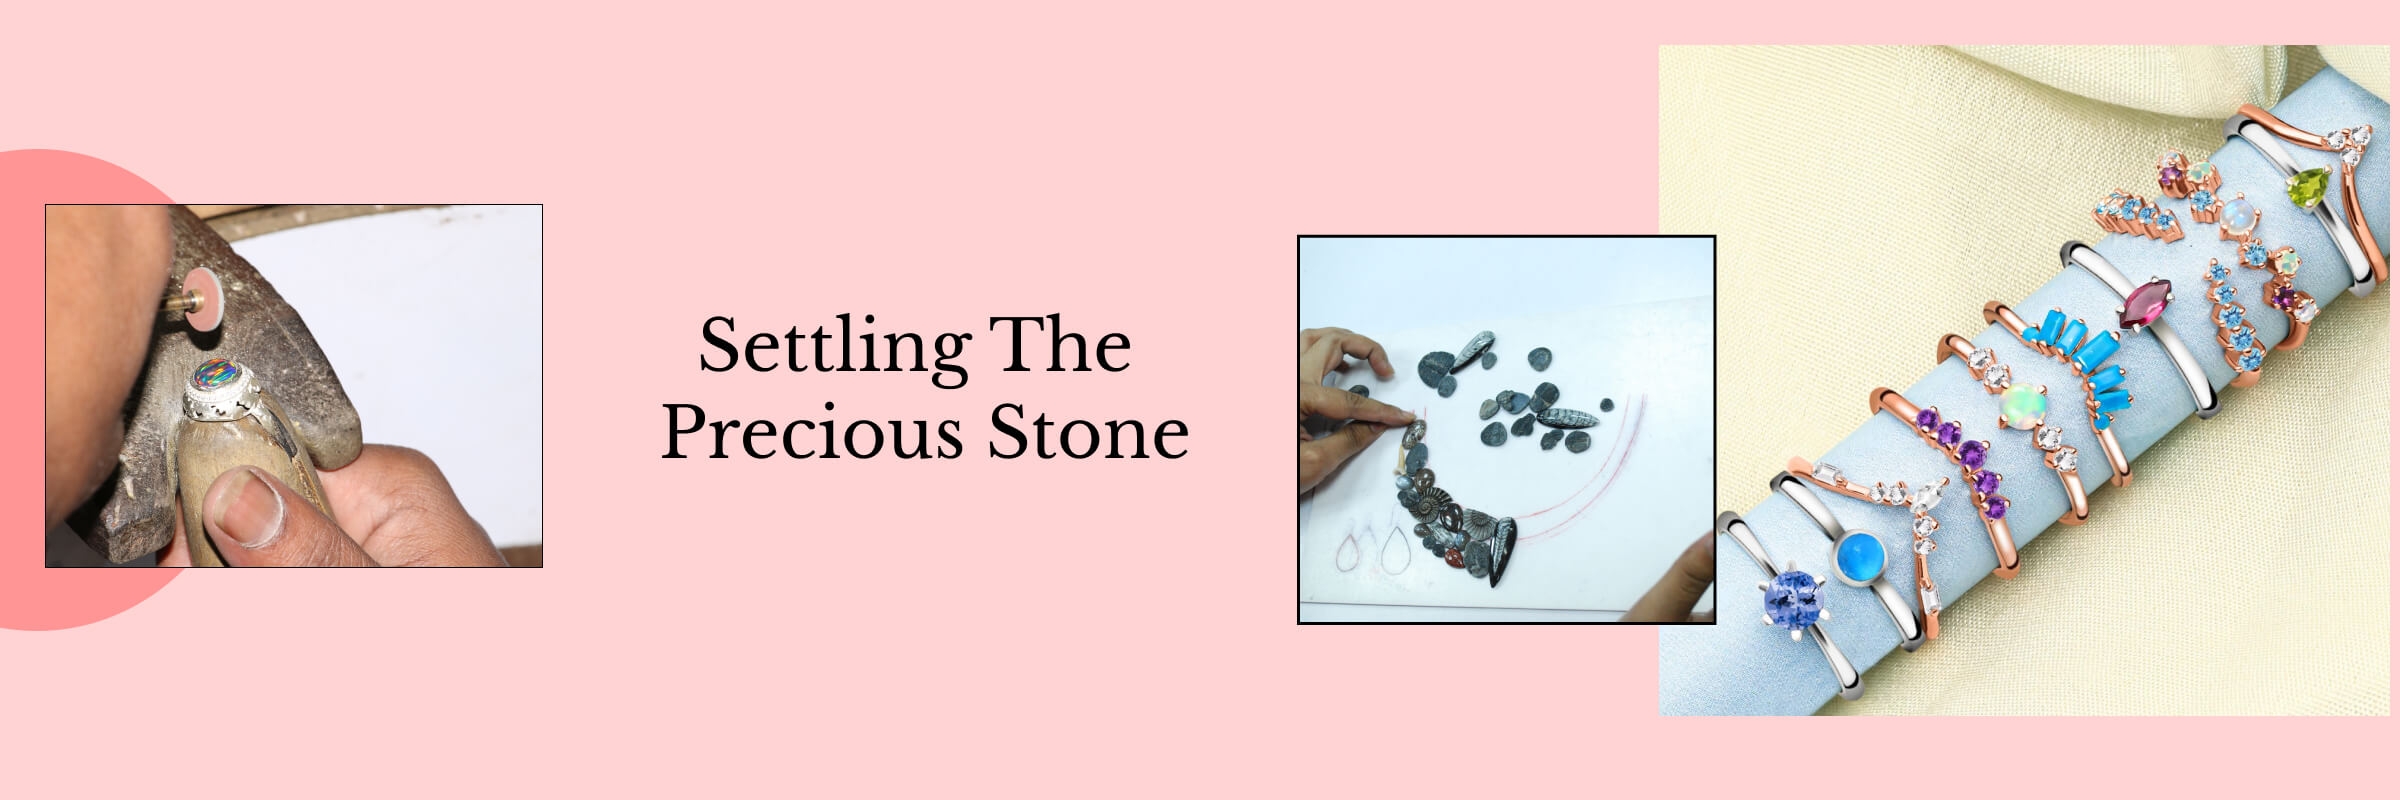 The Stone Setting Process